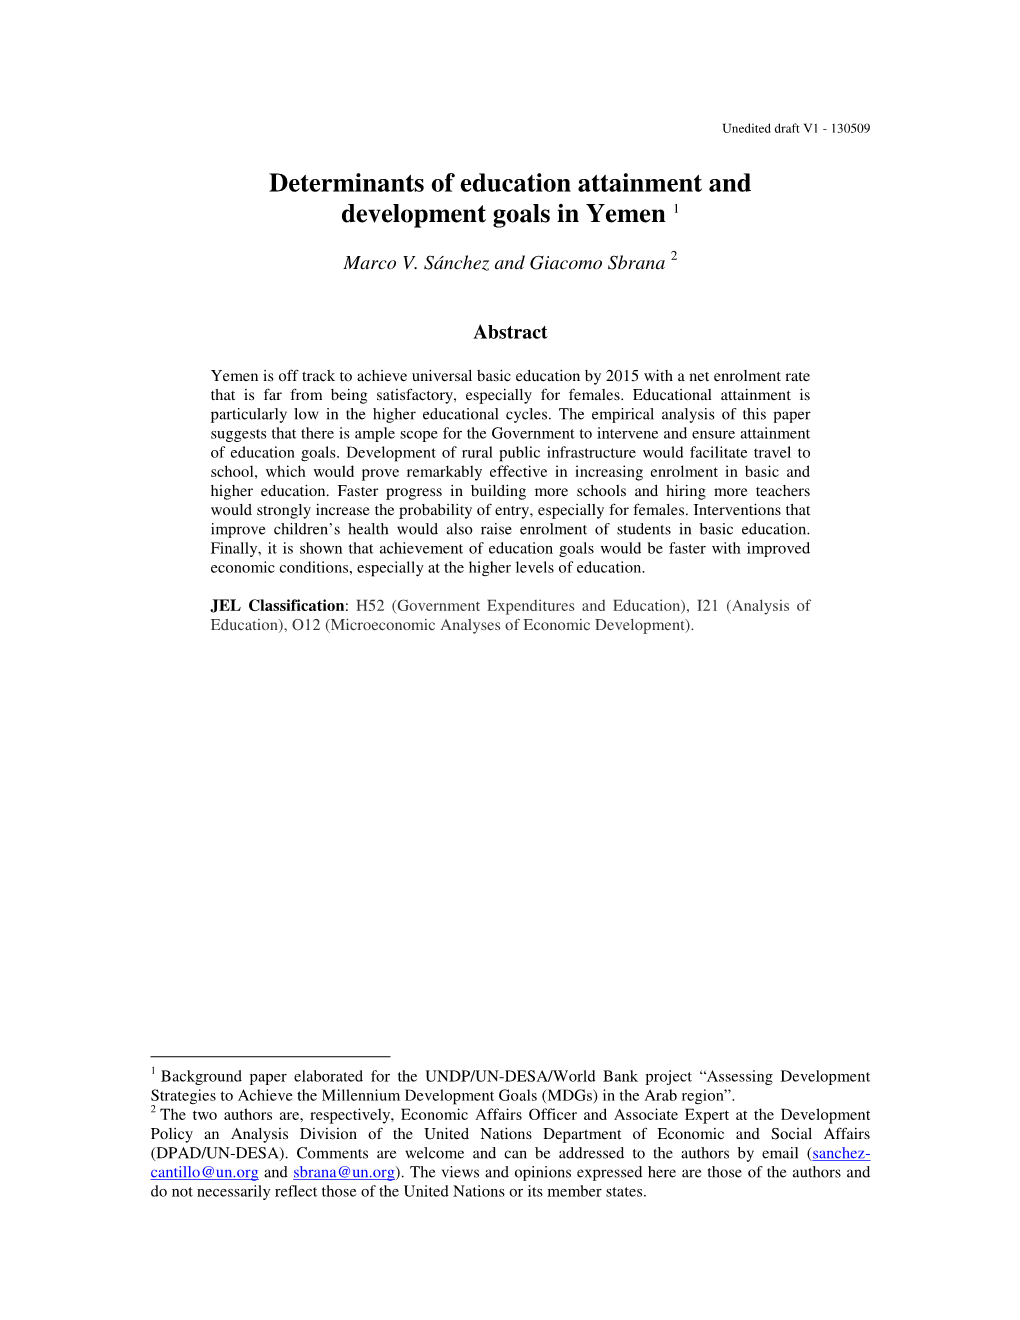 Determinants of Education Attainment and Development Goals in Yemen 1